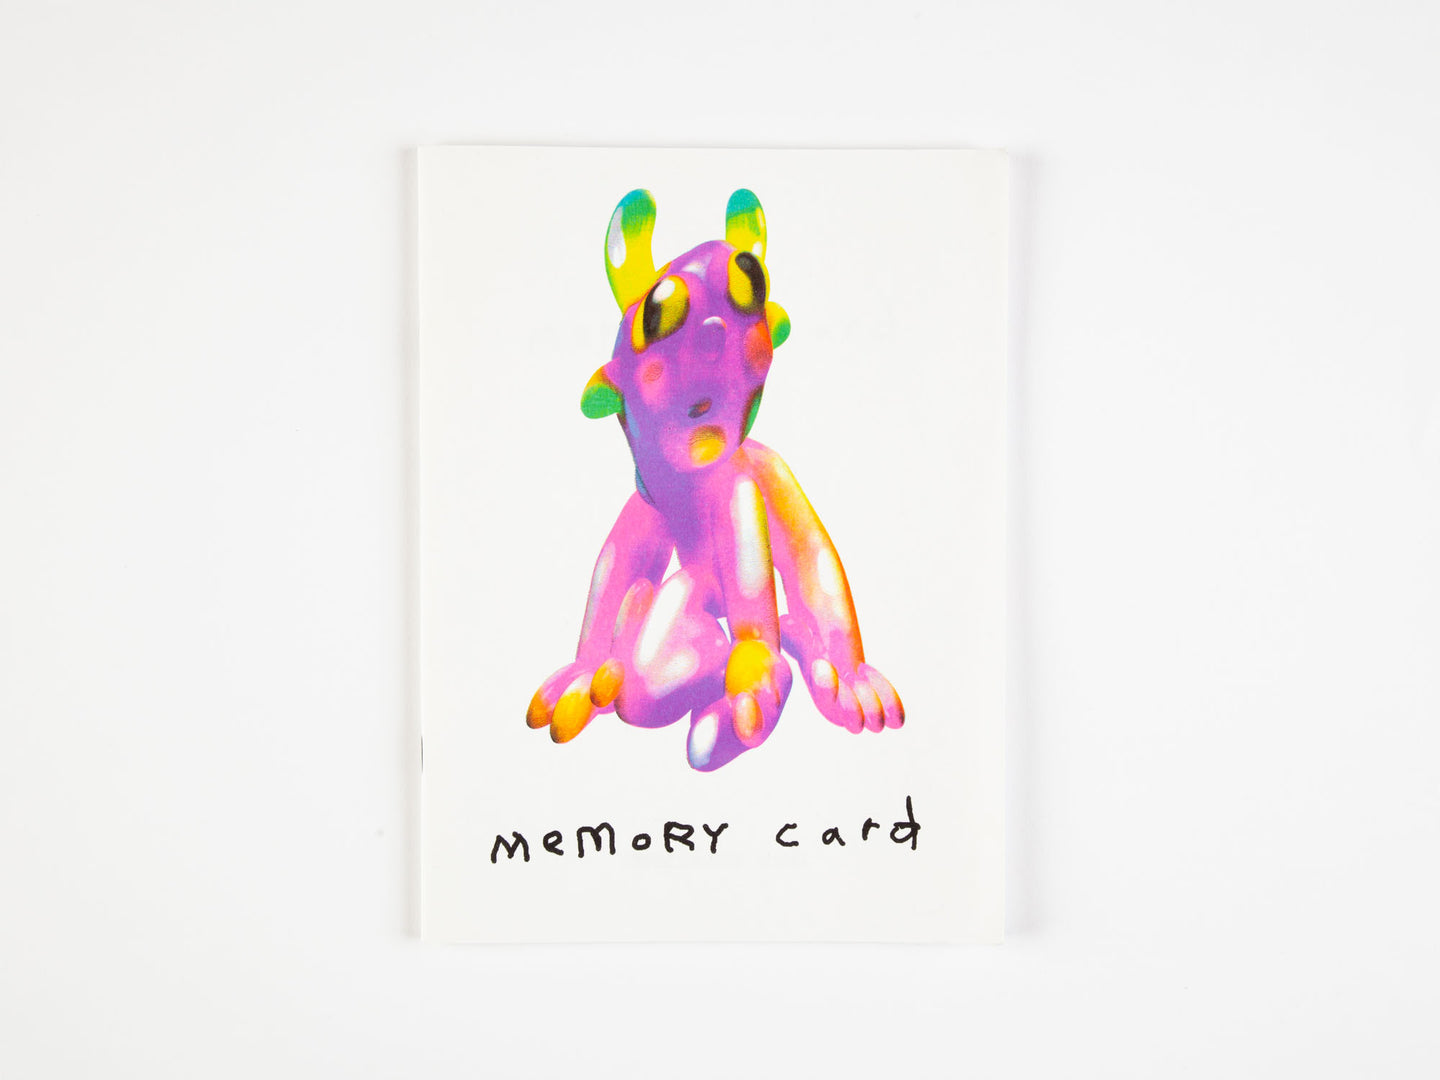 Memory Card by Sam Bailey